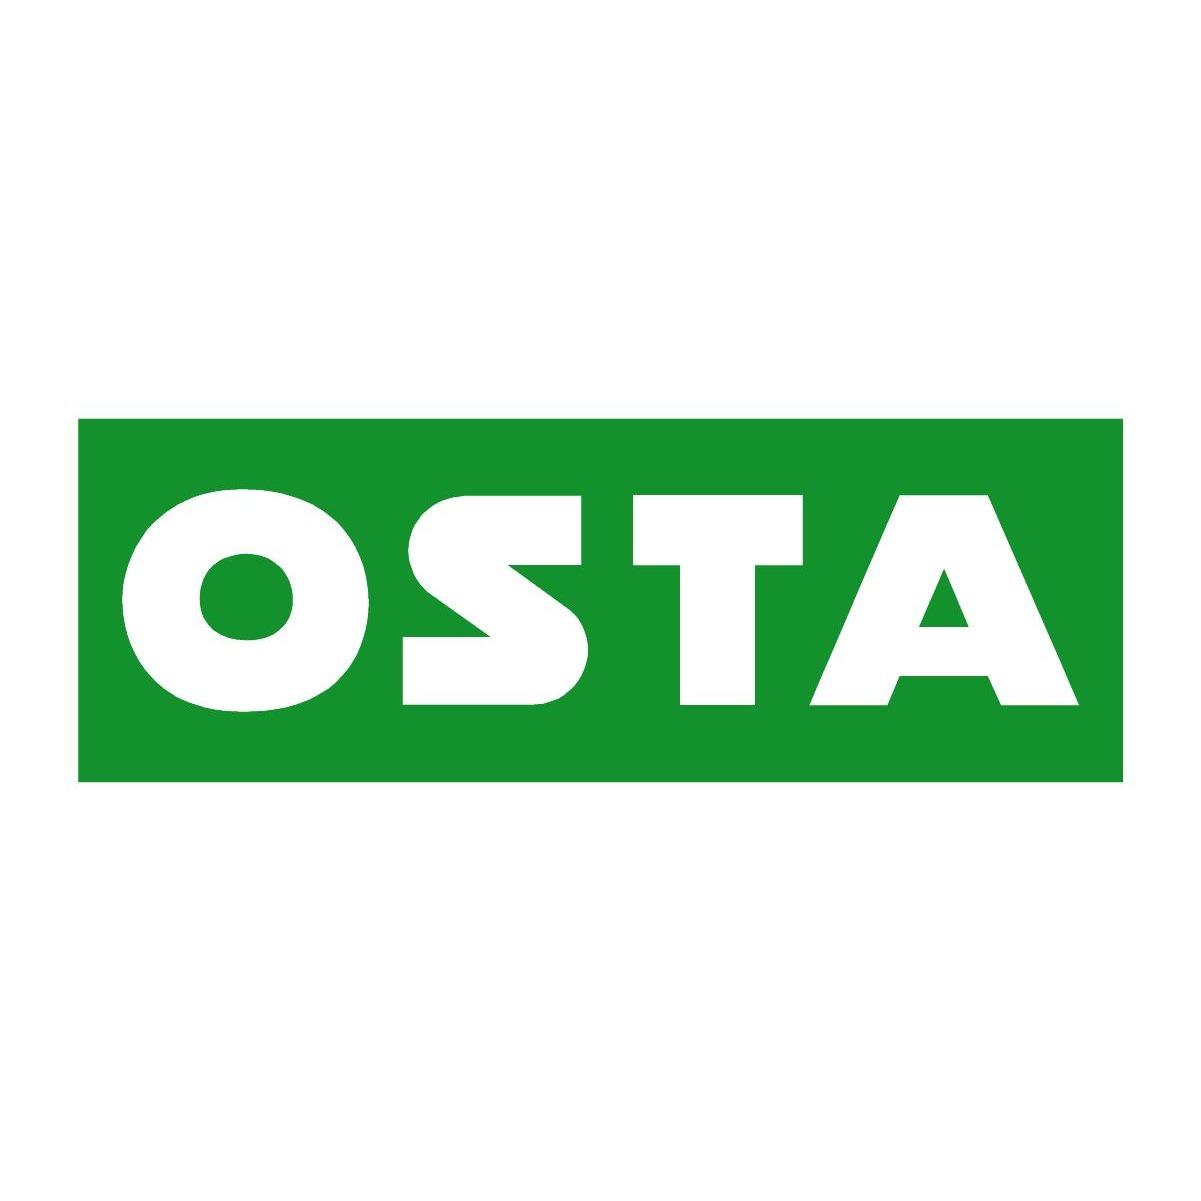 OSTA - Osttiroler Asphalt Hoch- u Tiefbauunternehmung GesmbH